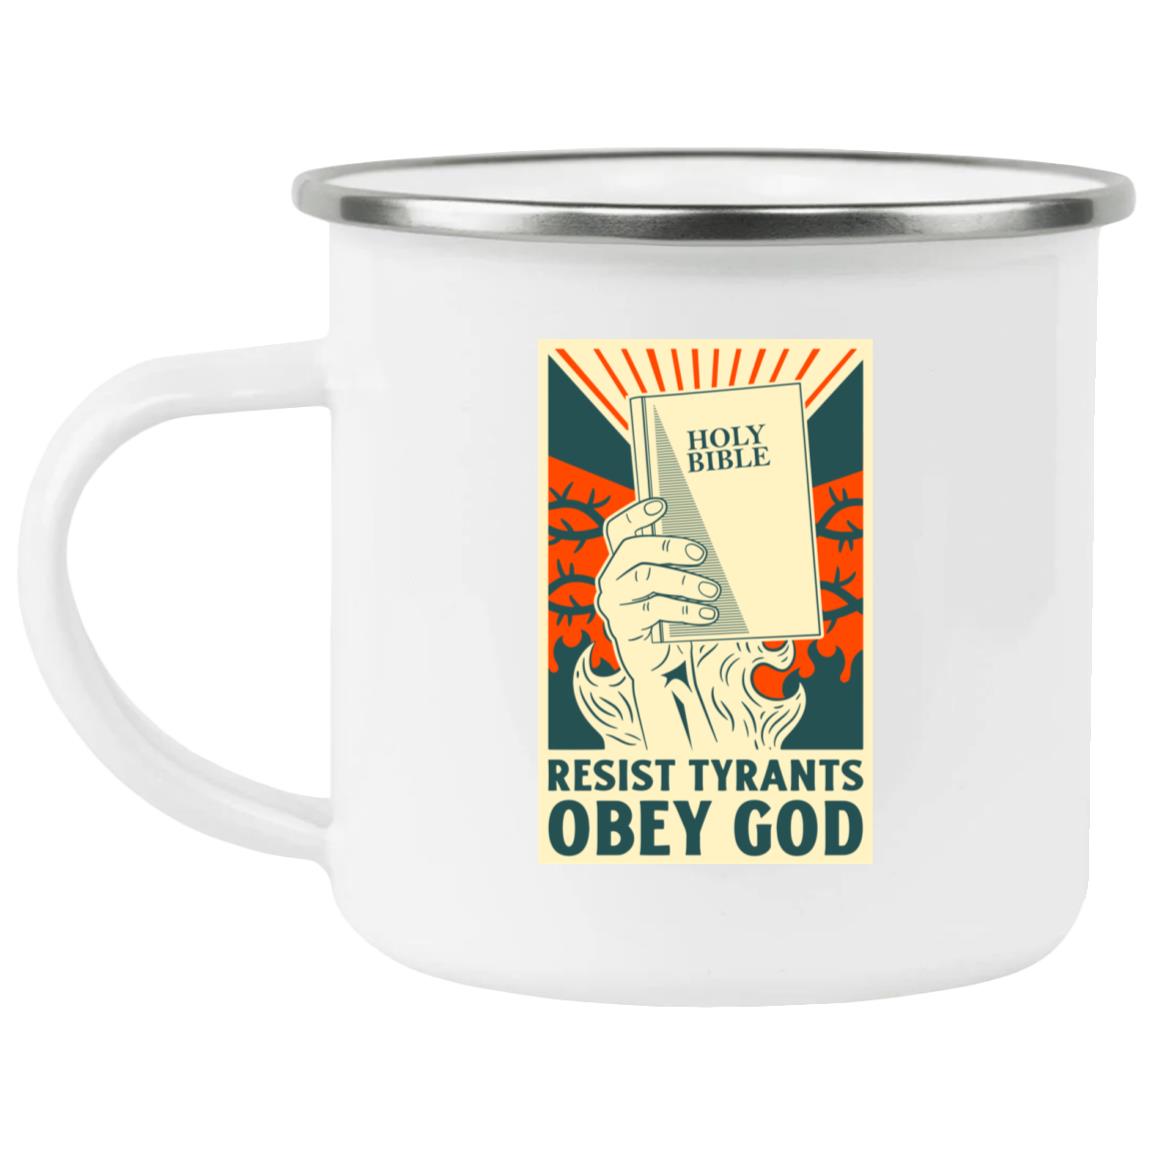 Resist Tyrants Obey God (12oz Enamel Camping Mug)